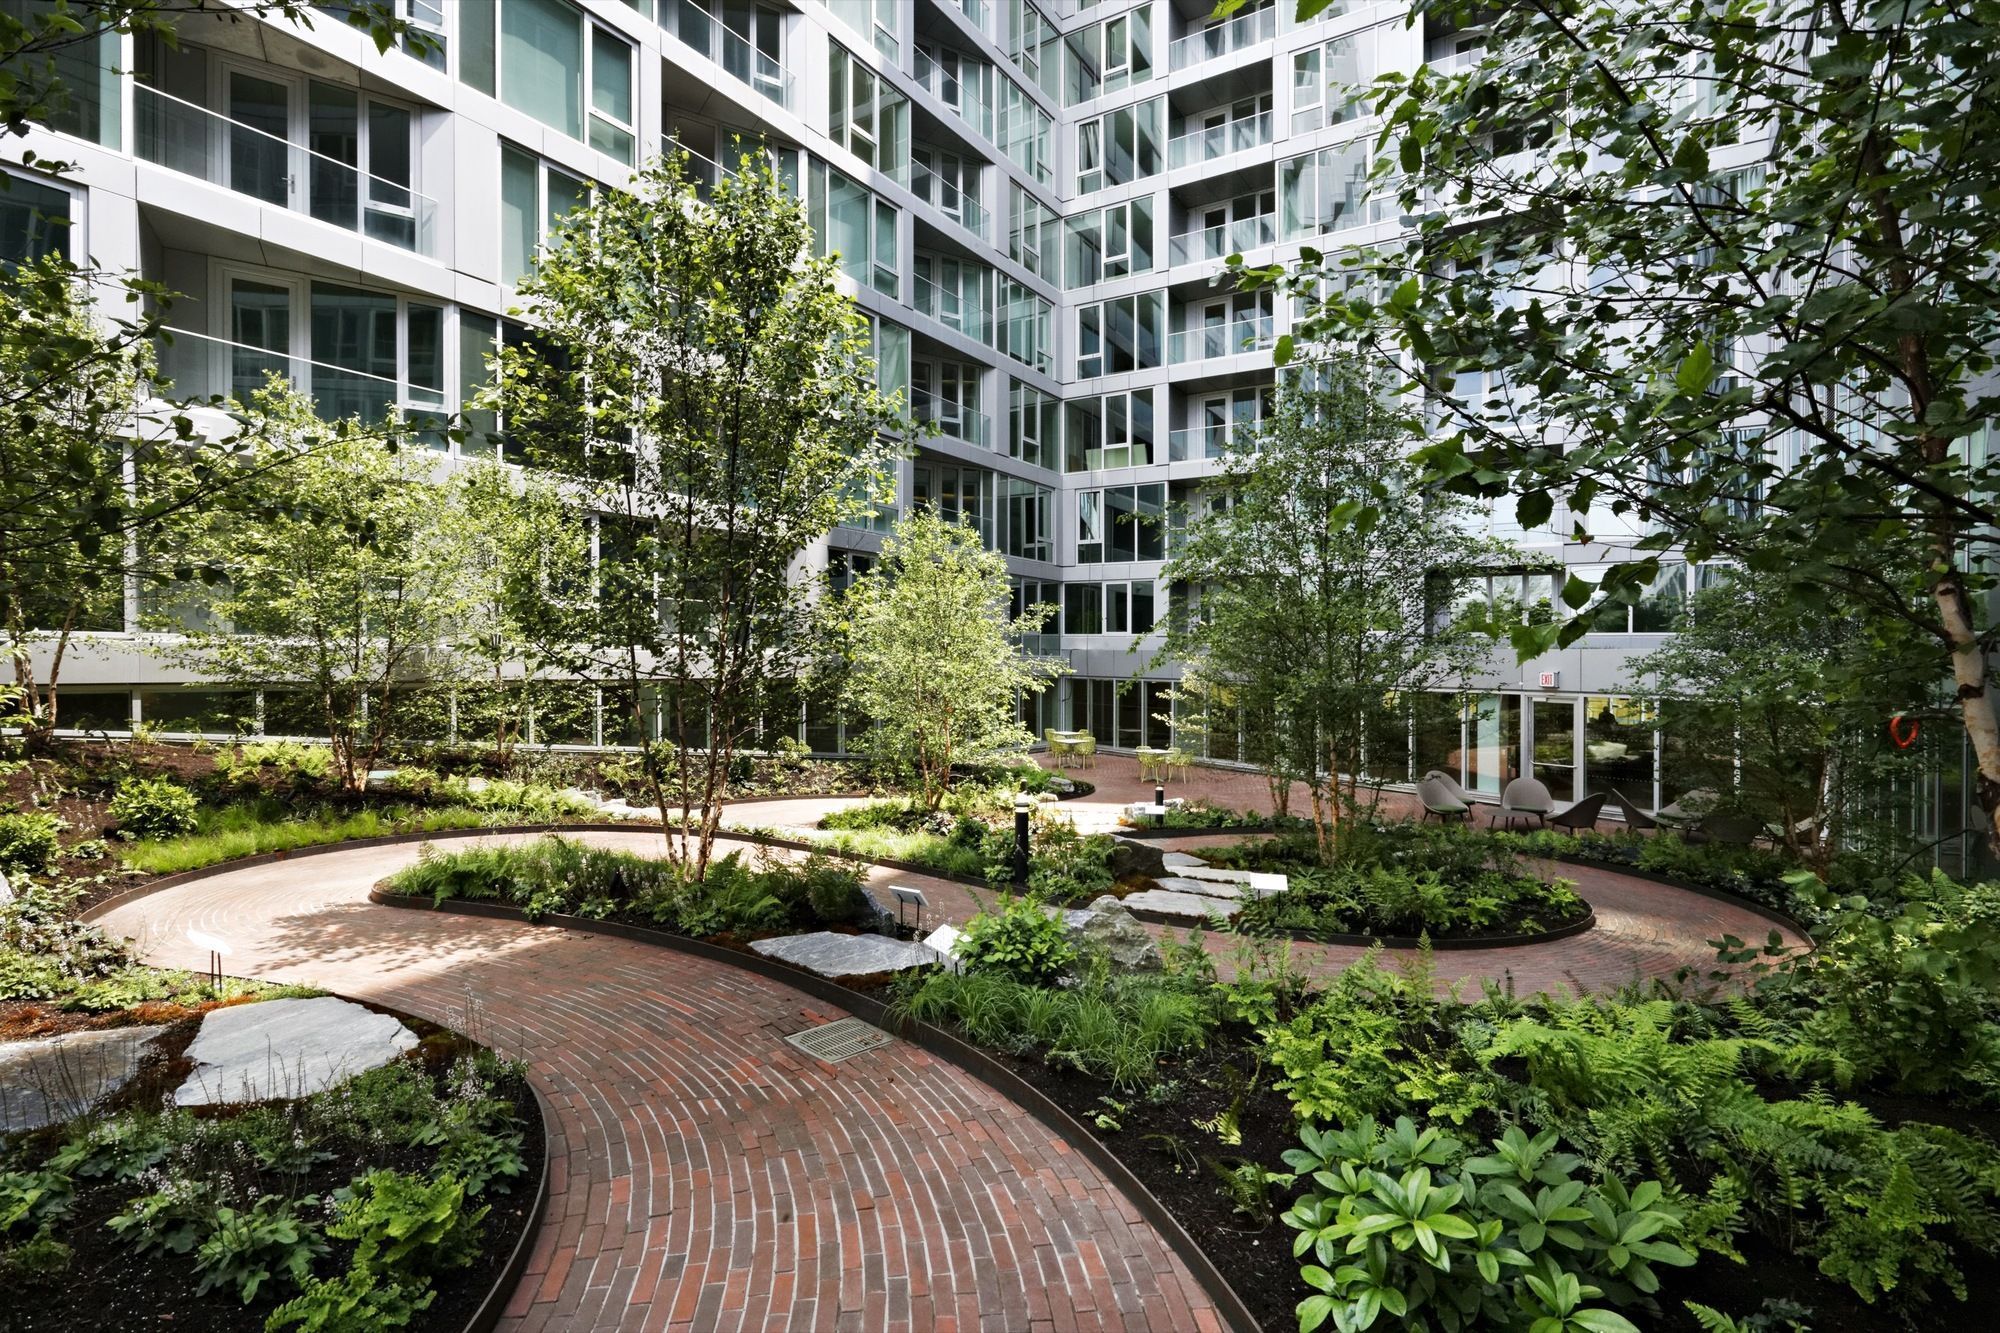 14 garden design Landscape architecture ideas